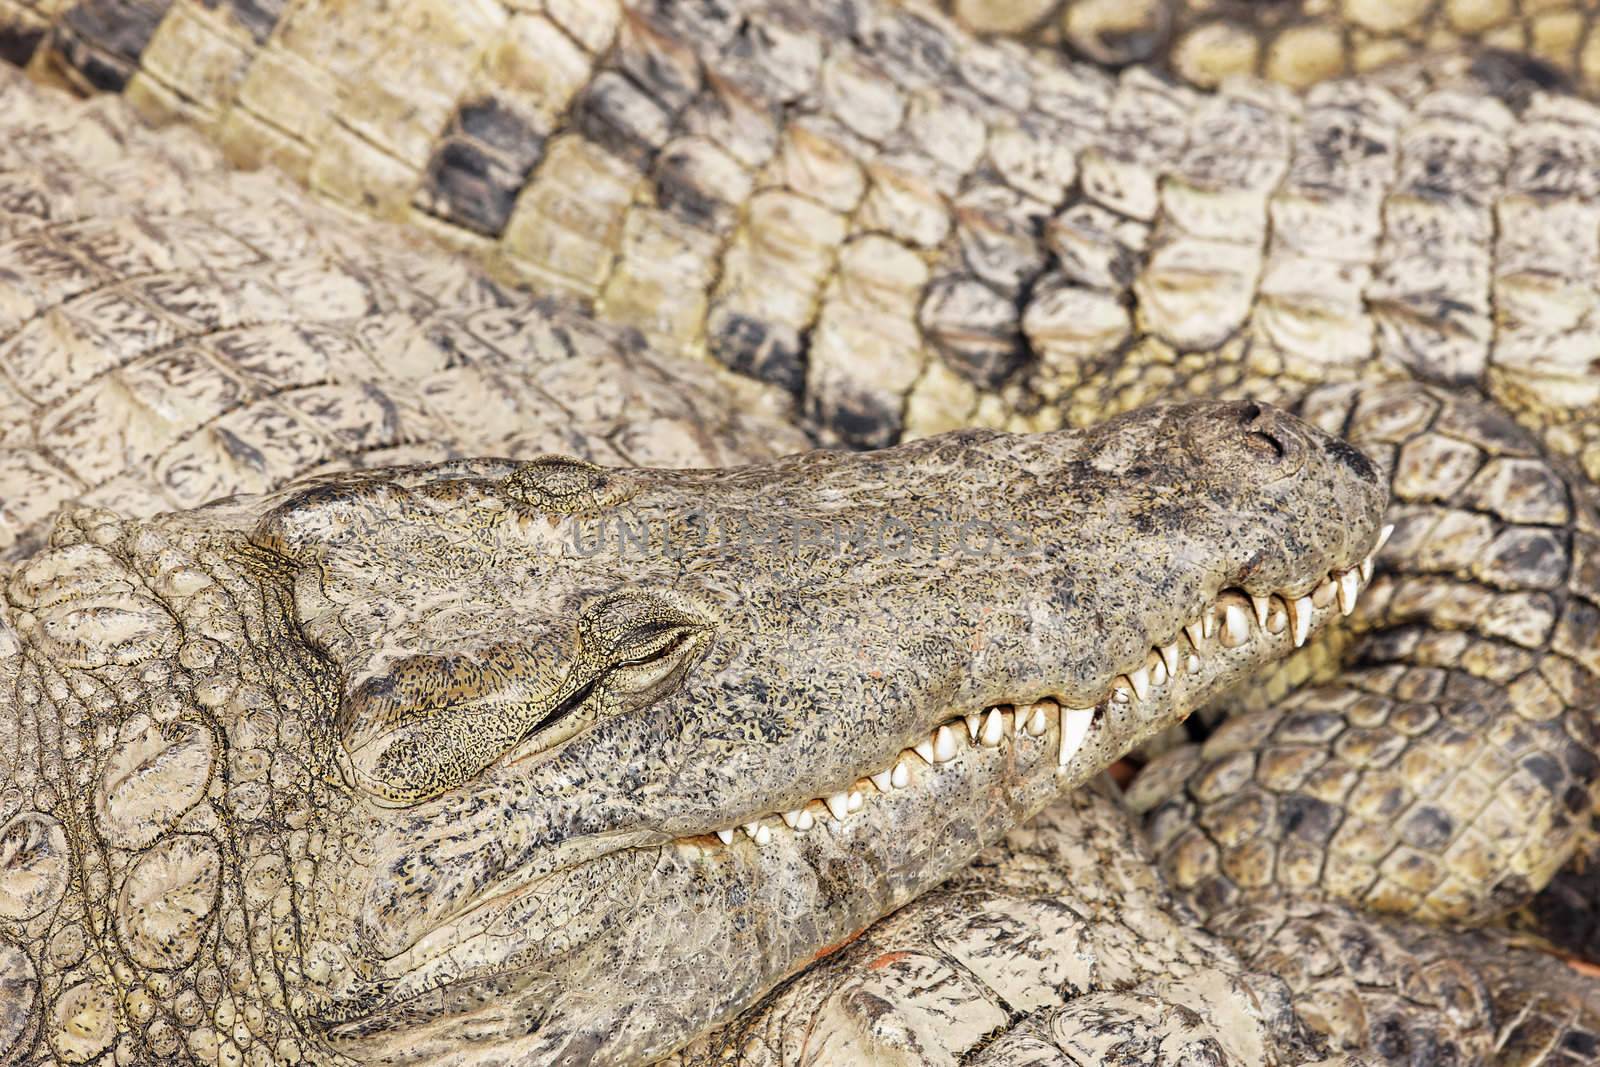 Crocodile with head above other crocodiles sleeping